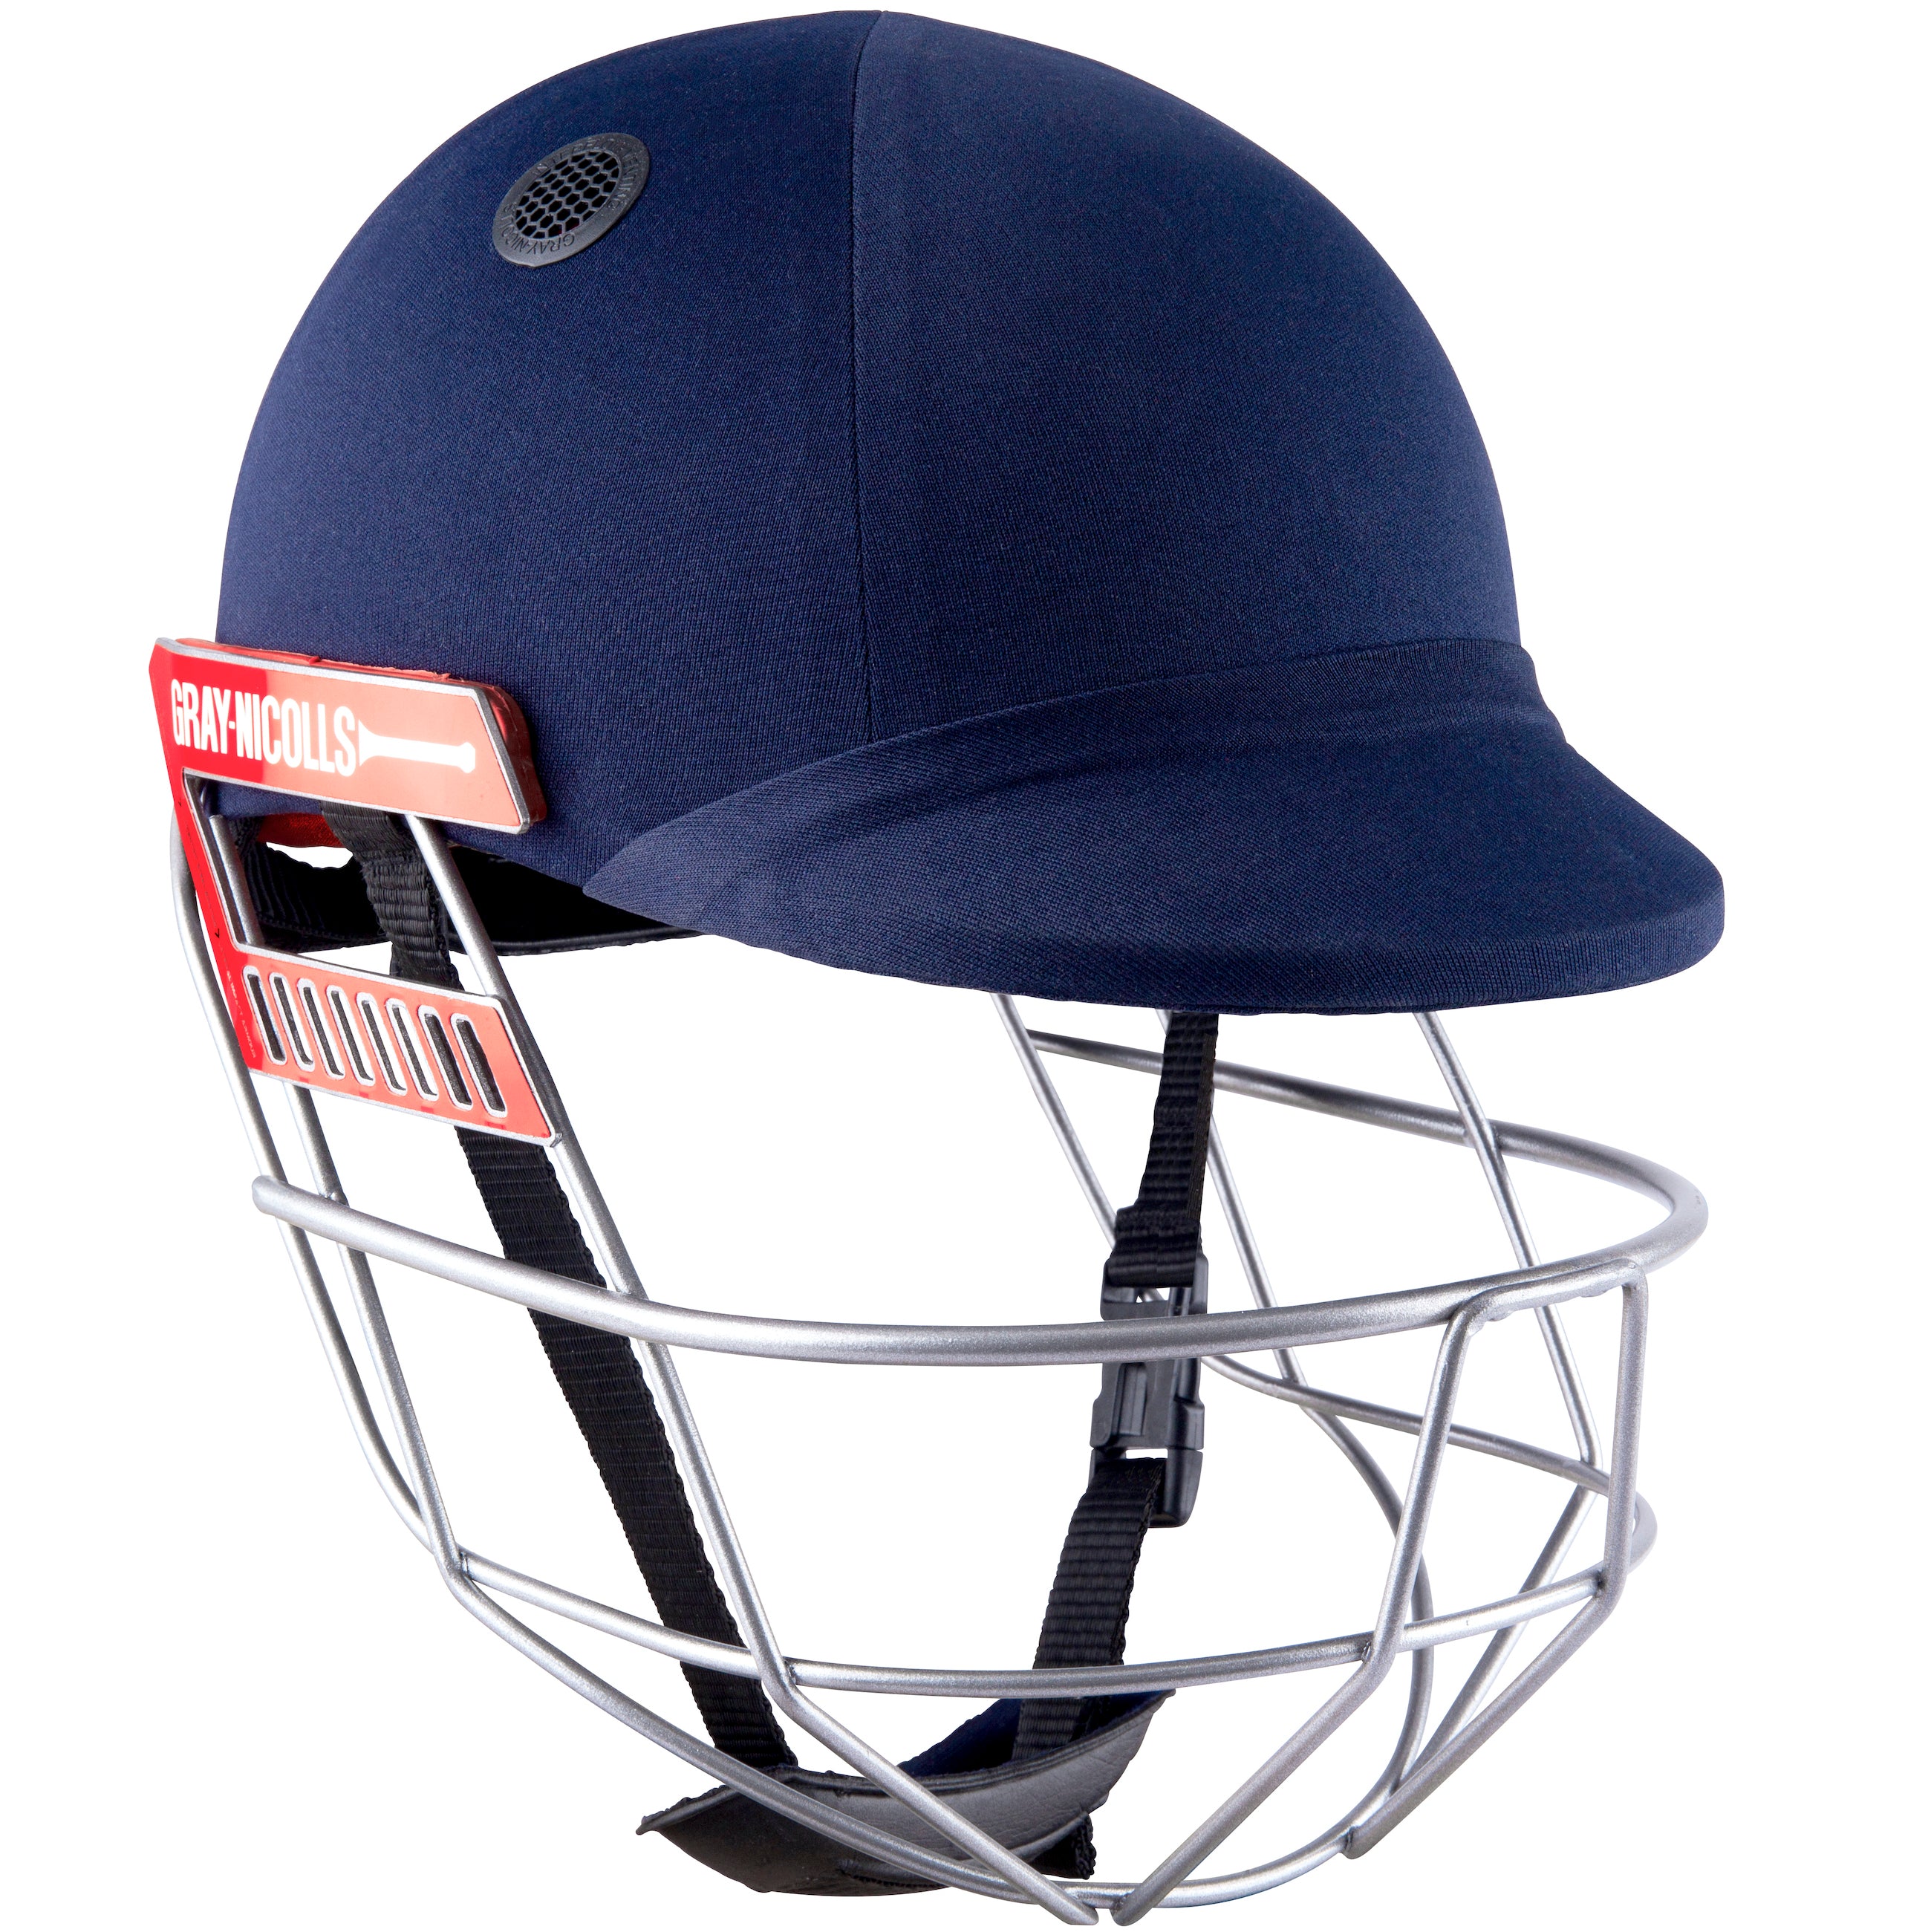 Ultimate Pro Cricket Helmet - Small